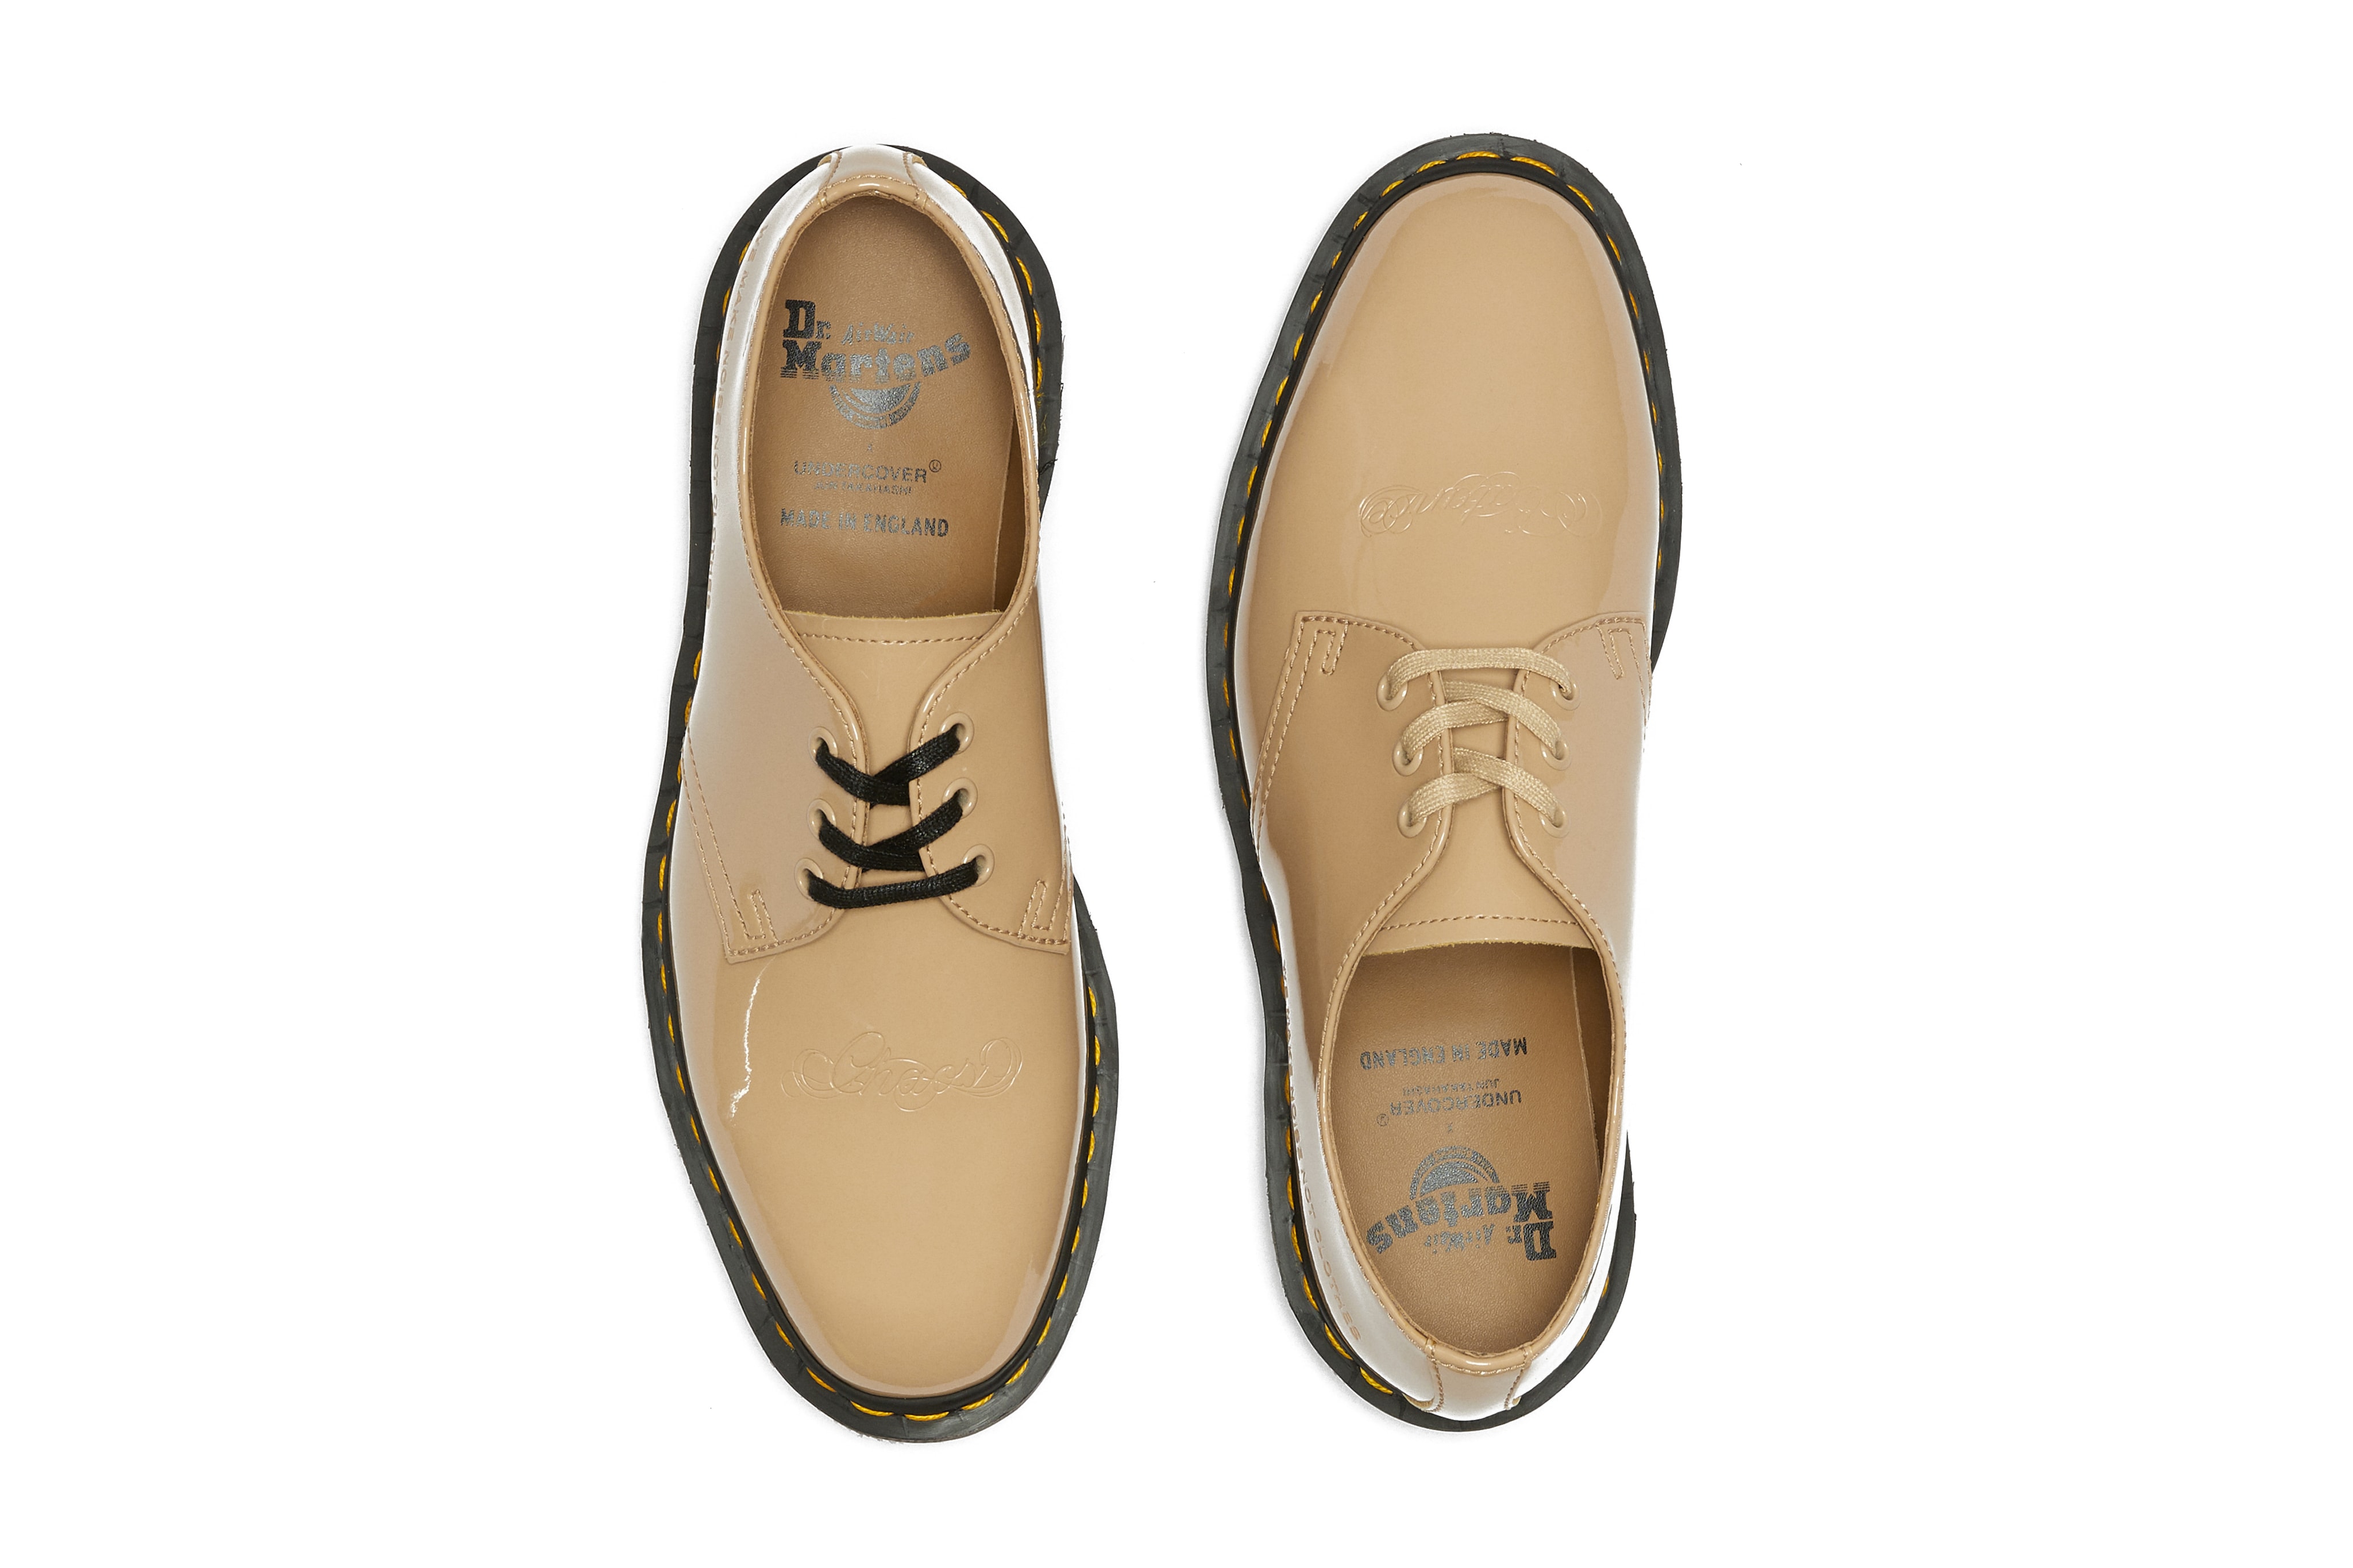 UNDERCOVER x Dr. Martens Patent Leather Shoes Collaboration Collection Drop Black Beige 